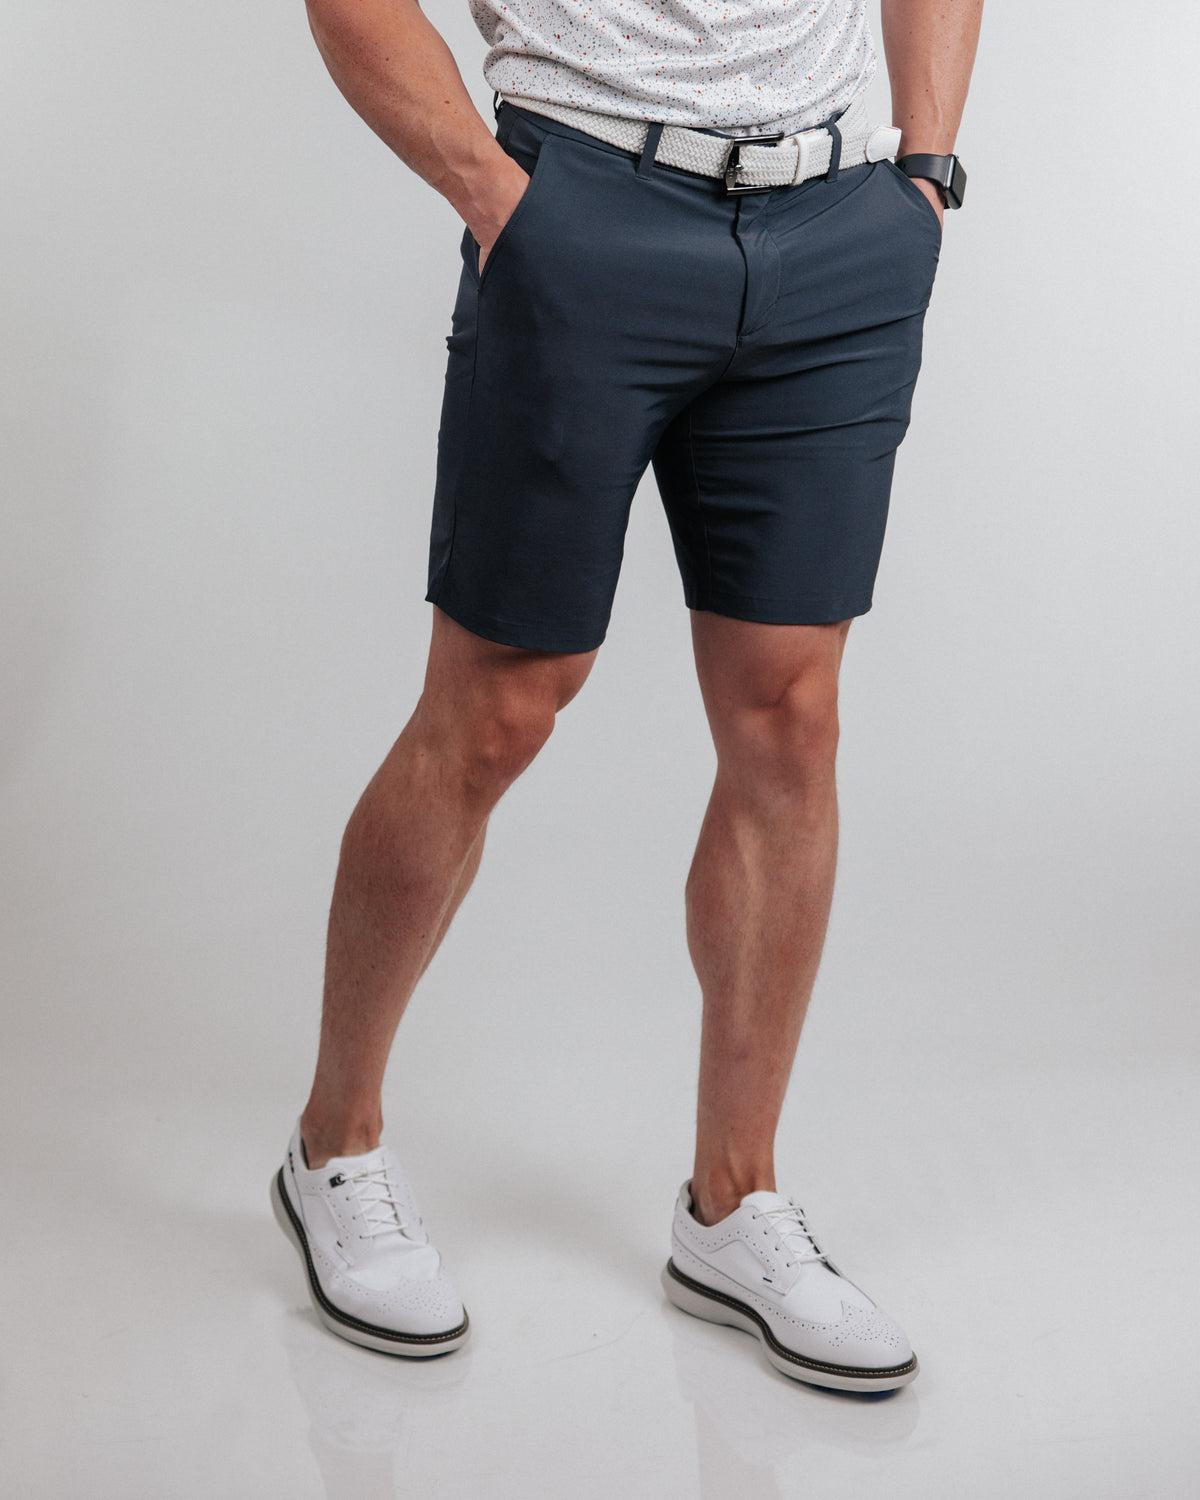 Primo Dark Gray Shorts - 7, 9, 11